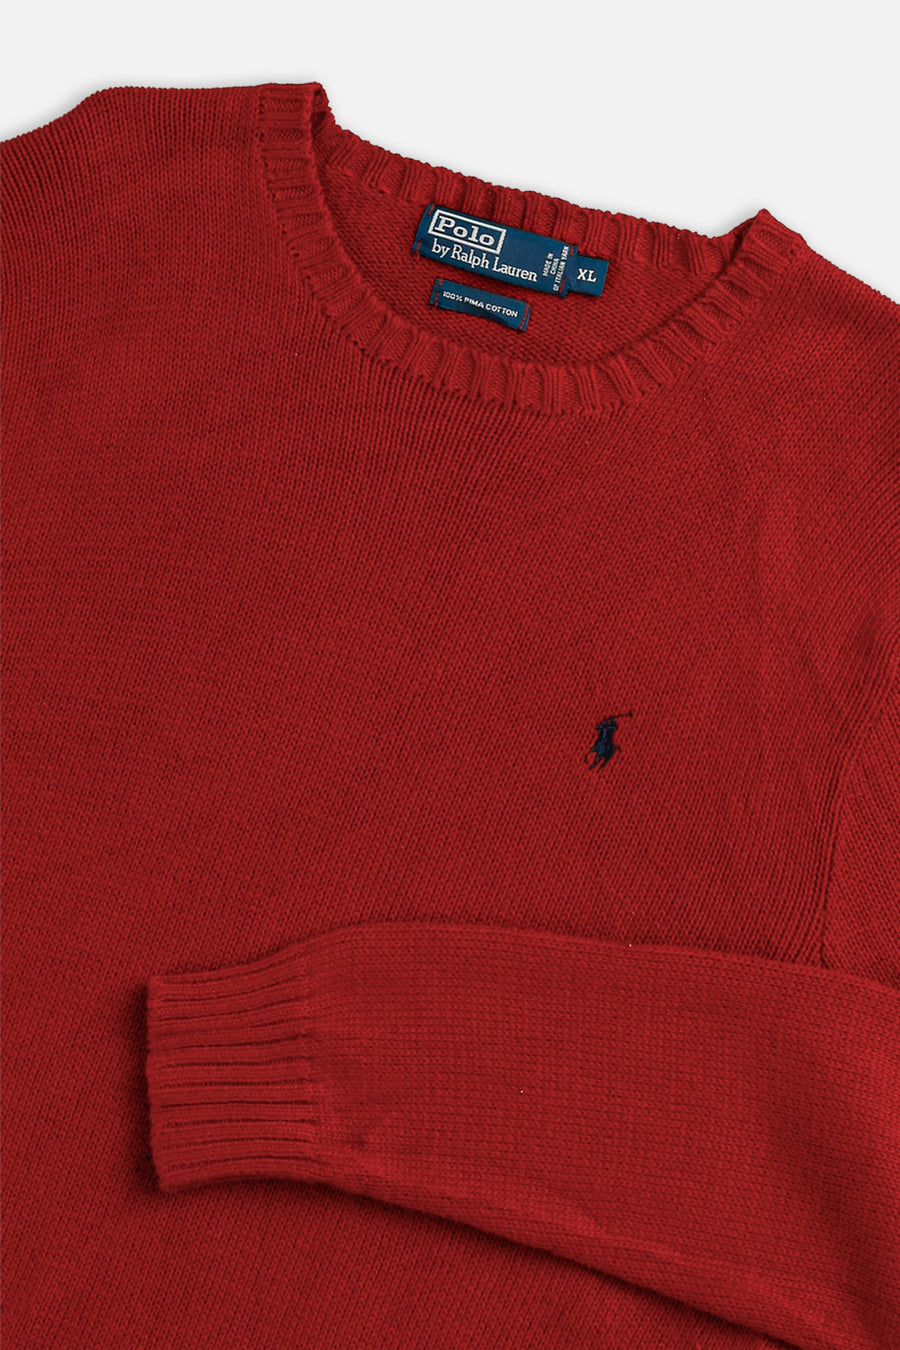 Vintage Knit Sweater - L, XL